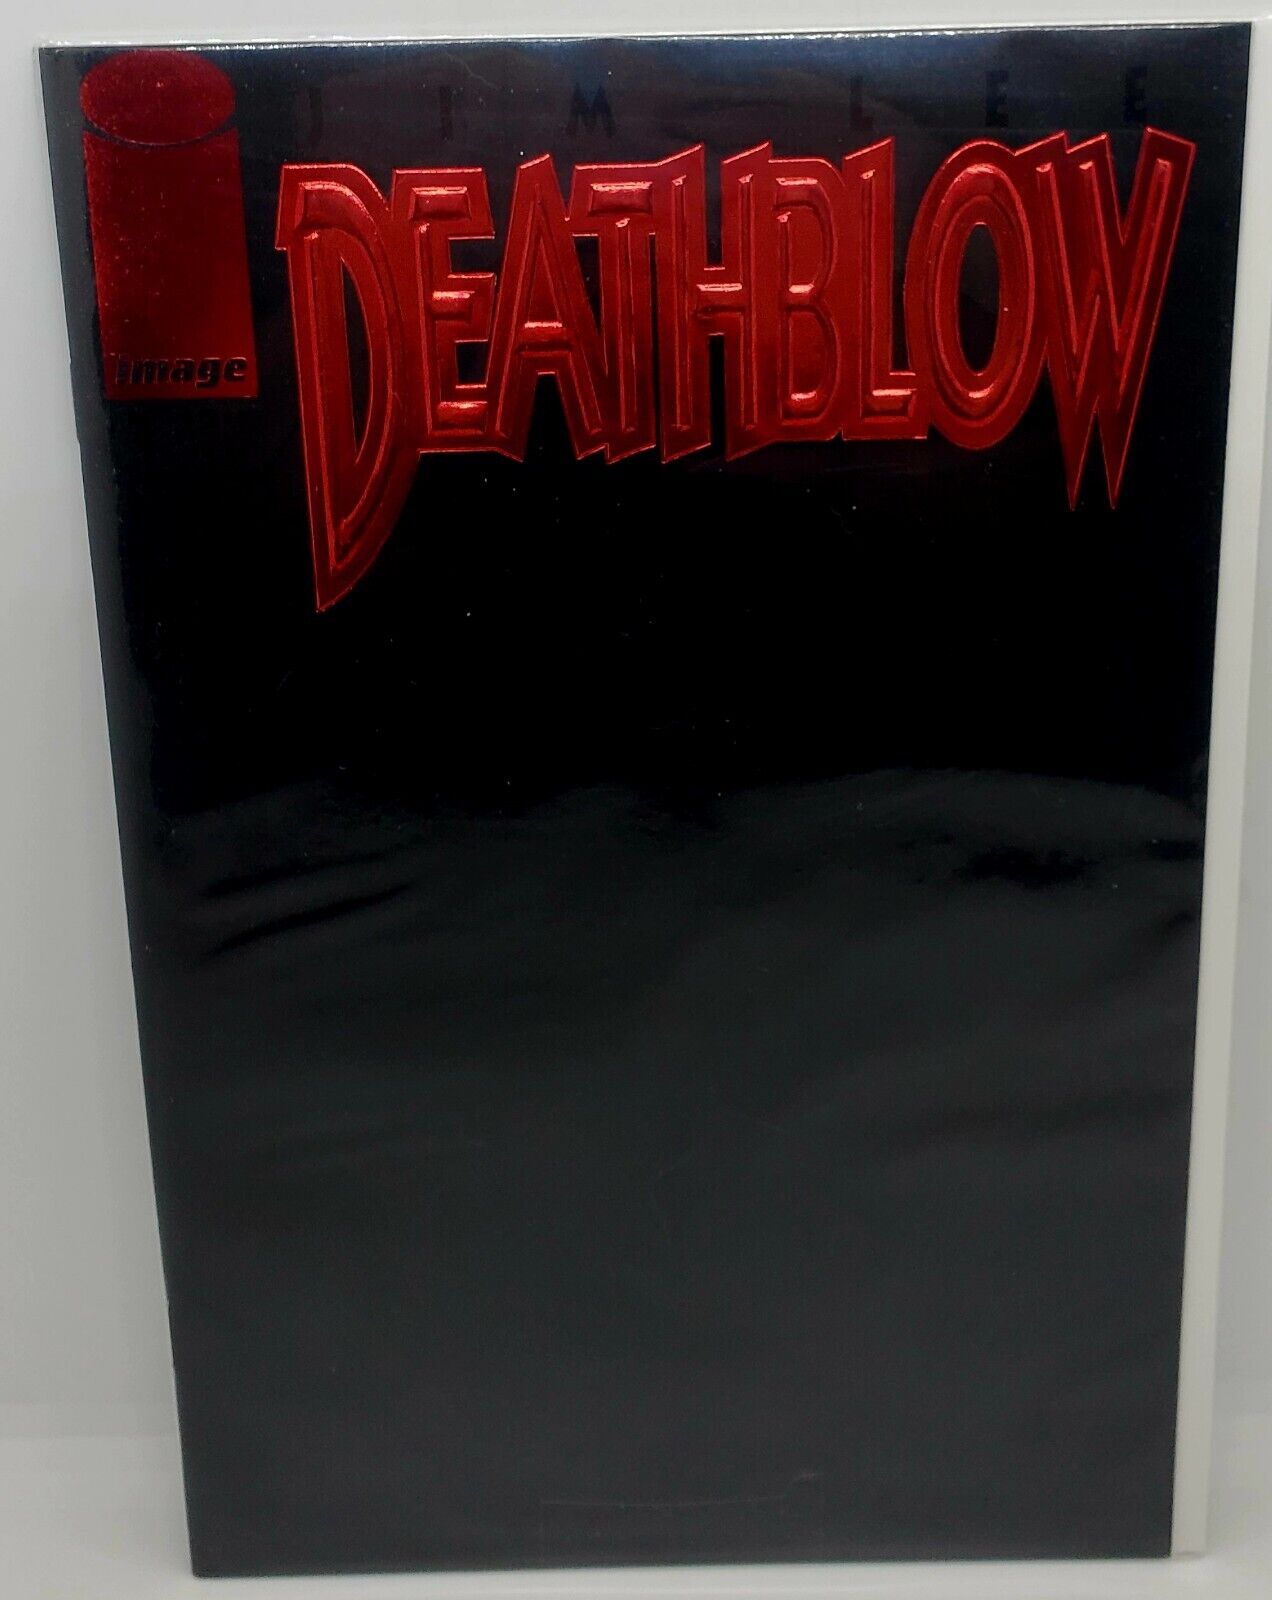 Vintage Deathblow #1 Vol 1 (Image, 1993) Red Foil Stamped Cover 1st Print Mint🔥